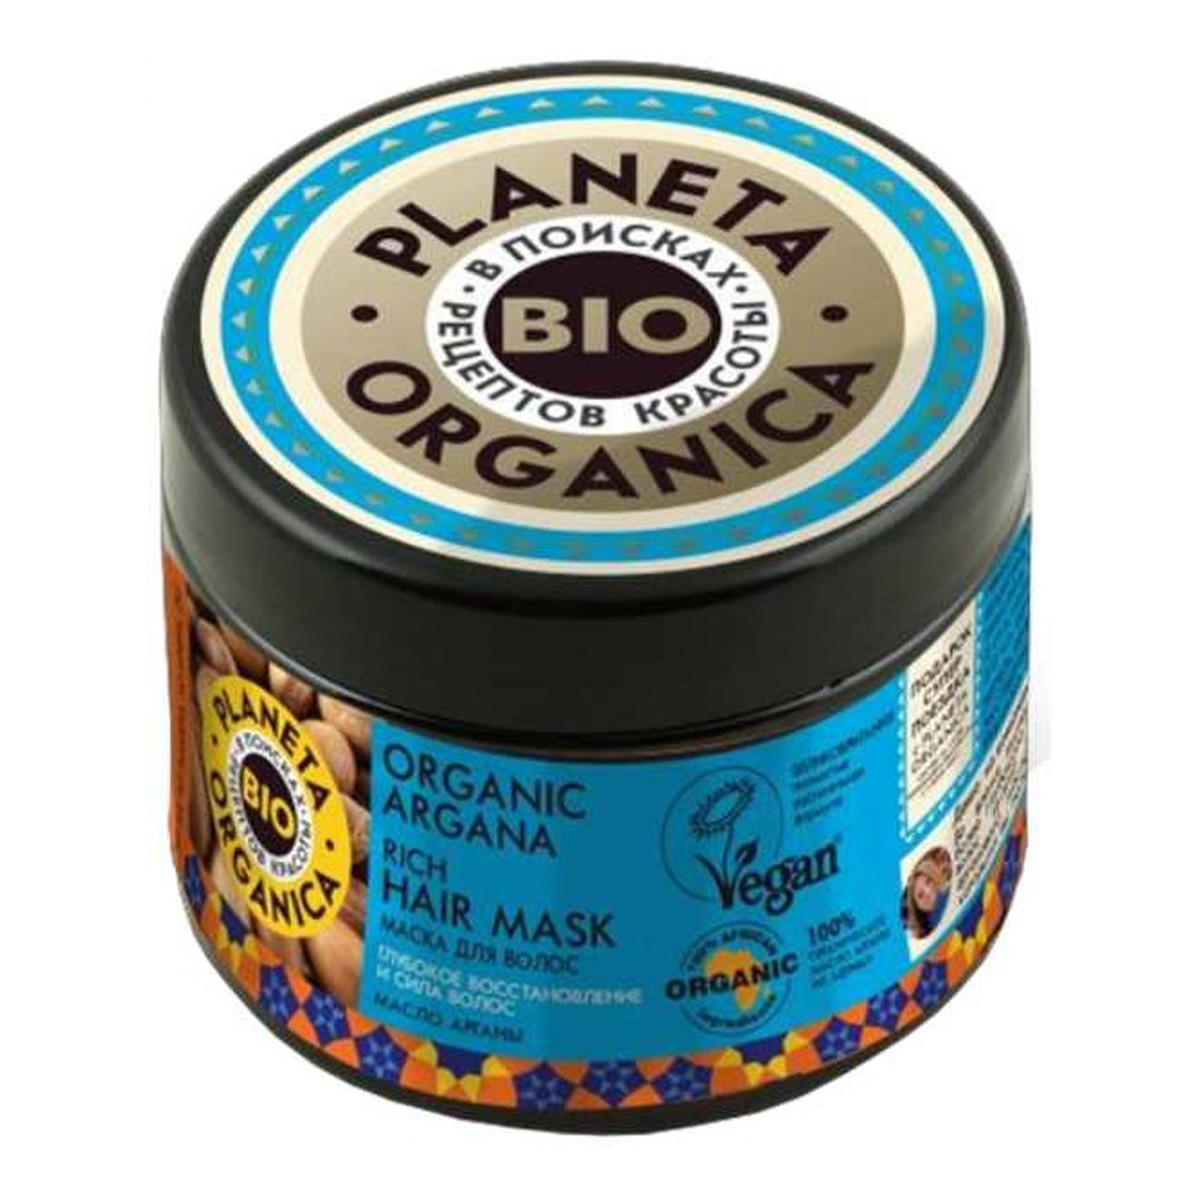 Planeta Organica Organic Argana Maska do włosów 300ml